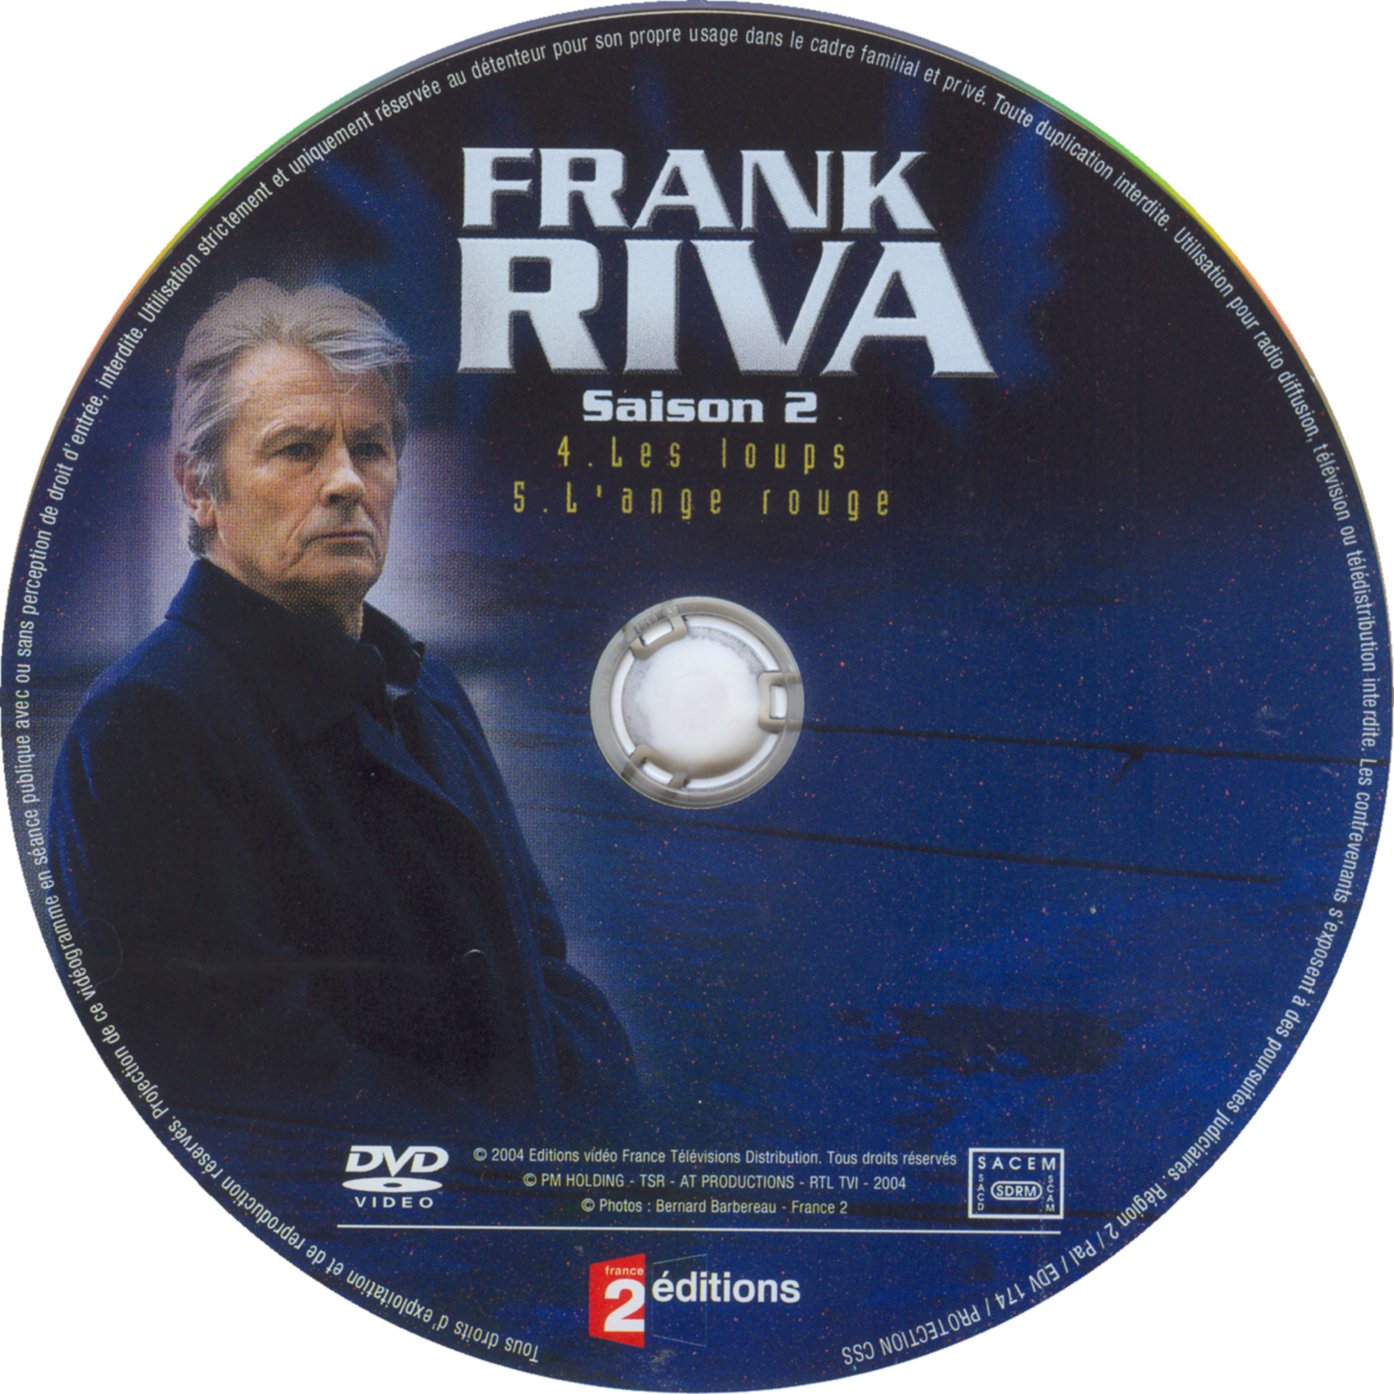 Frank Riva saison 2 DVD 1